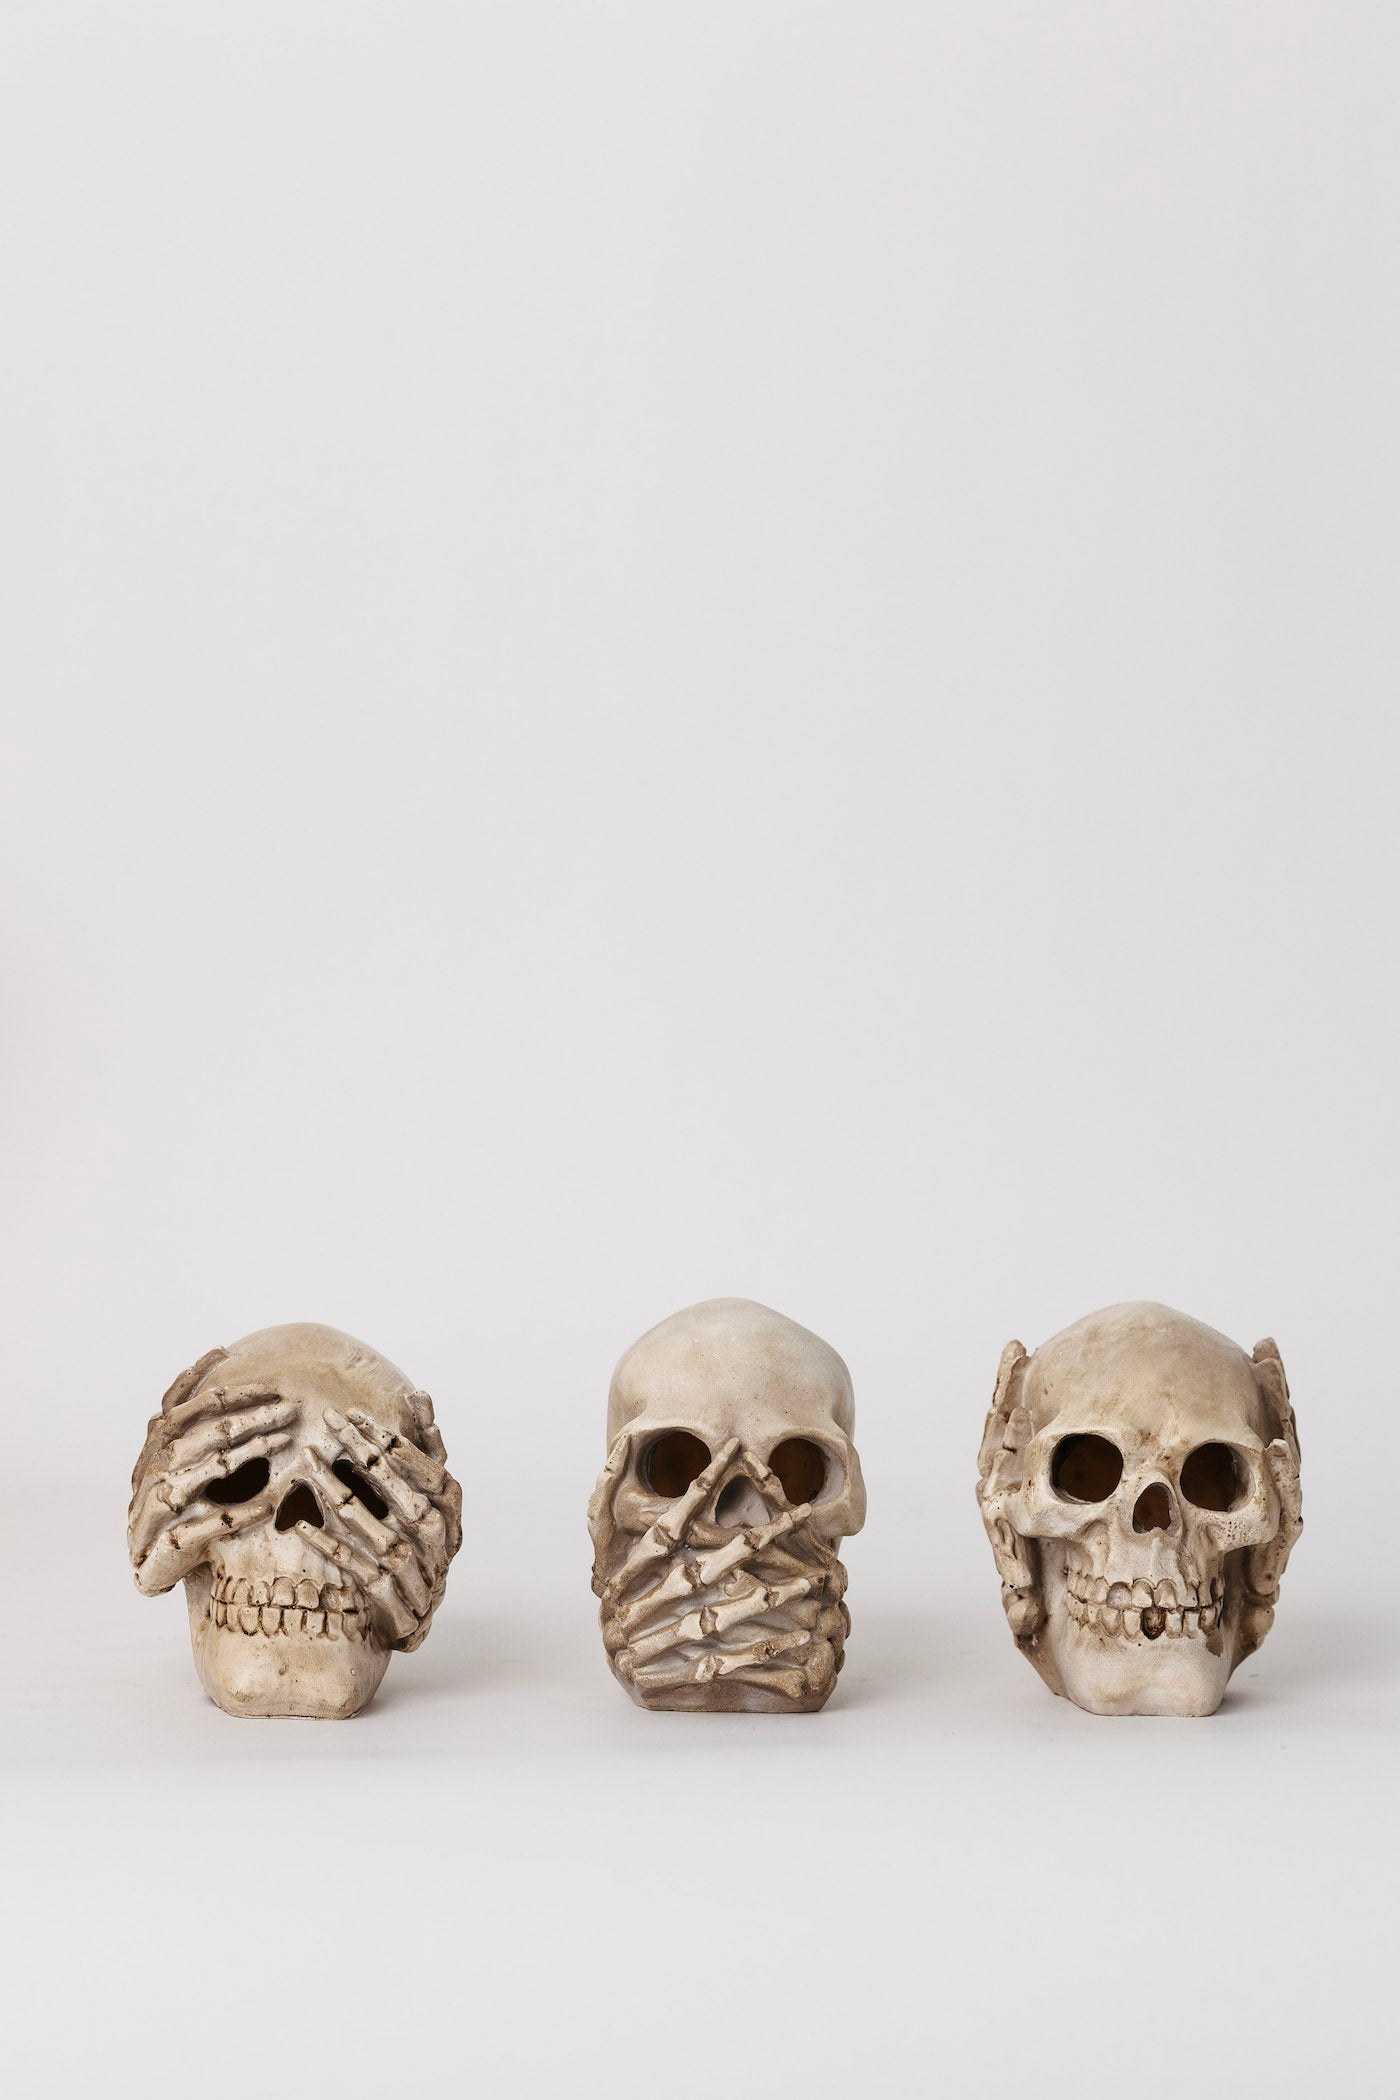 Eternal Skulls - Set of 3